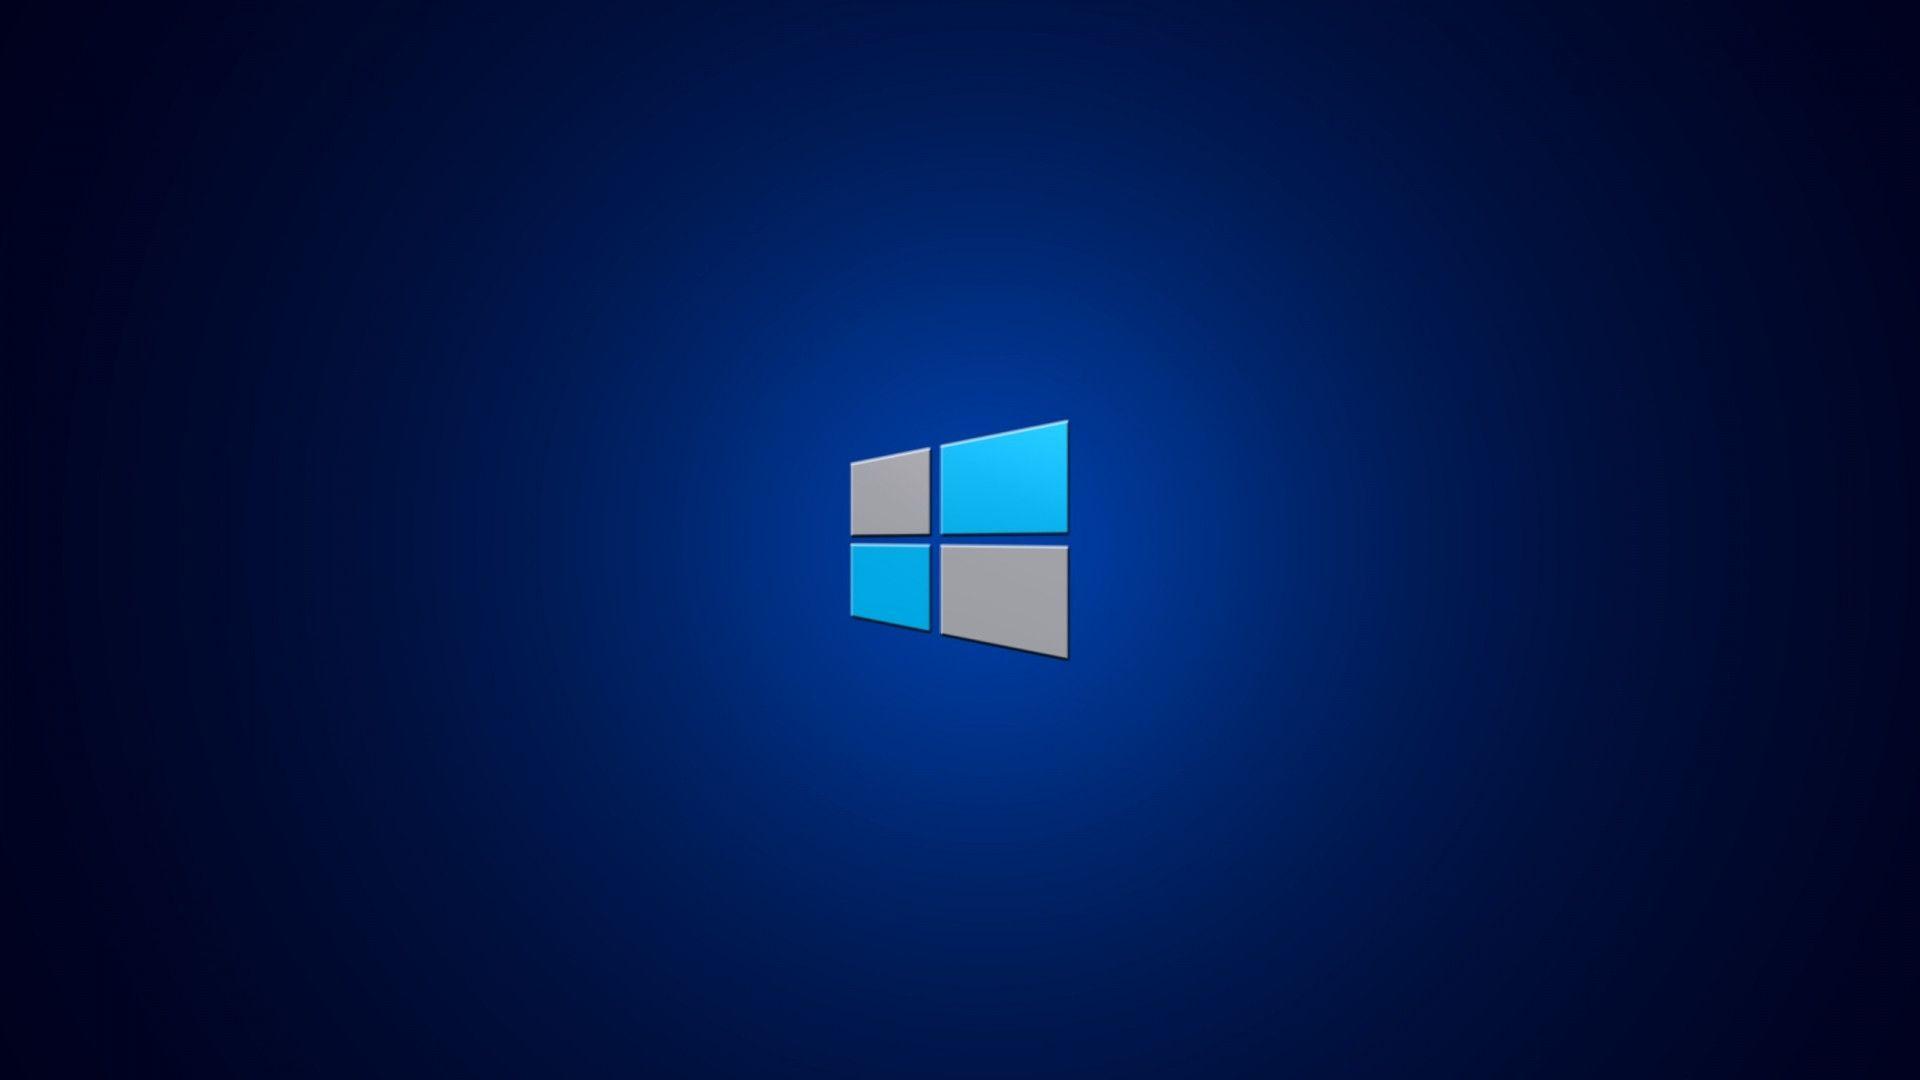 Windows 8 Background Wallpaper